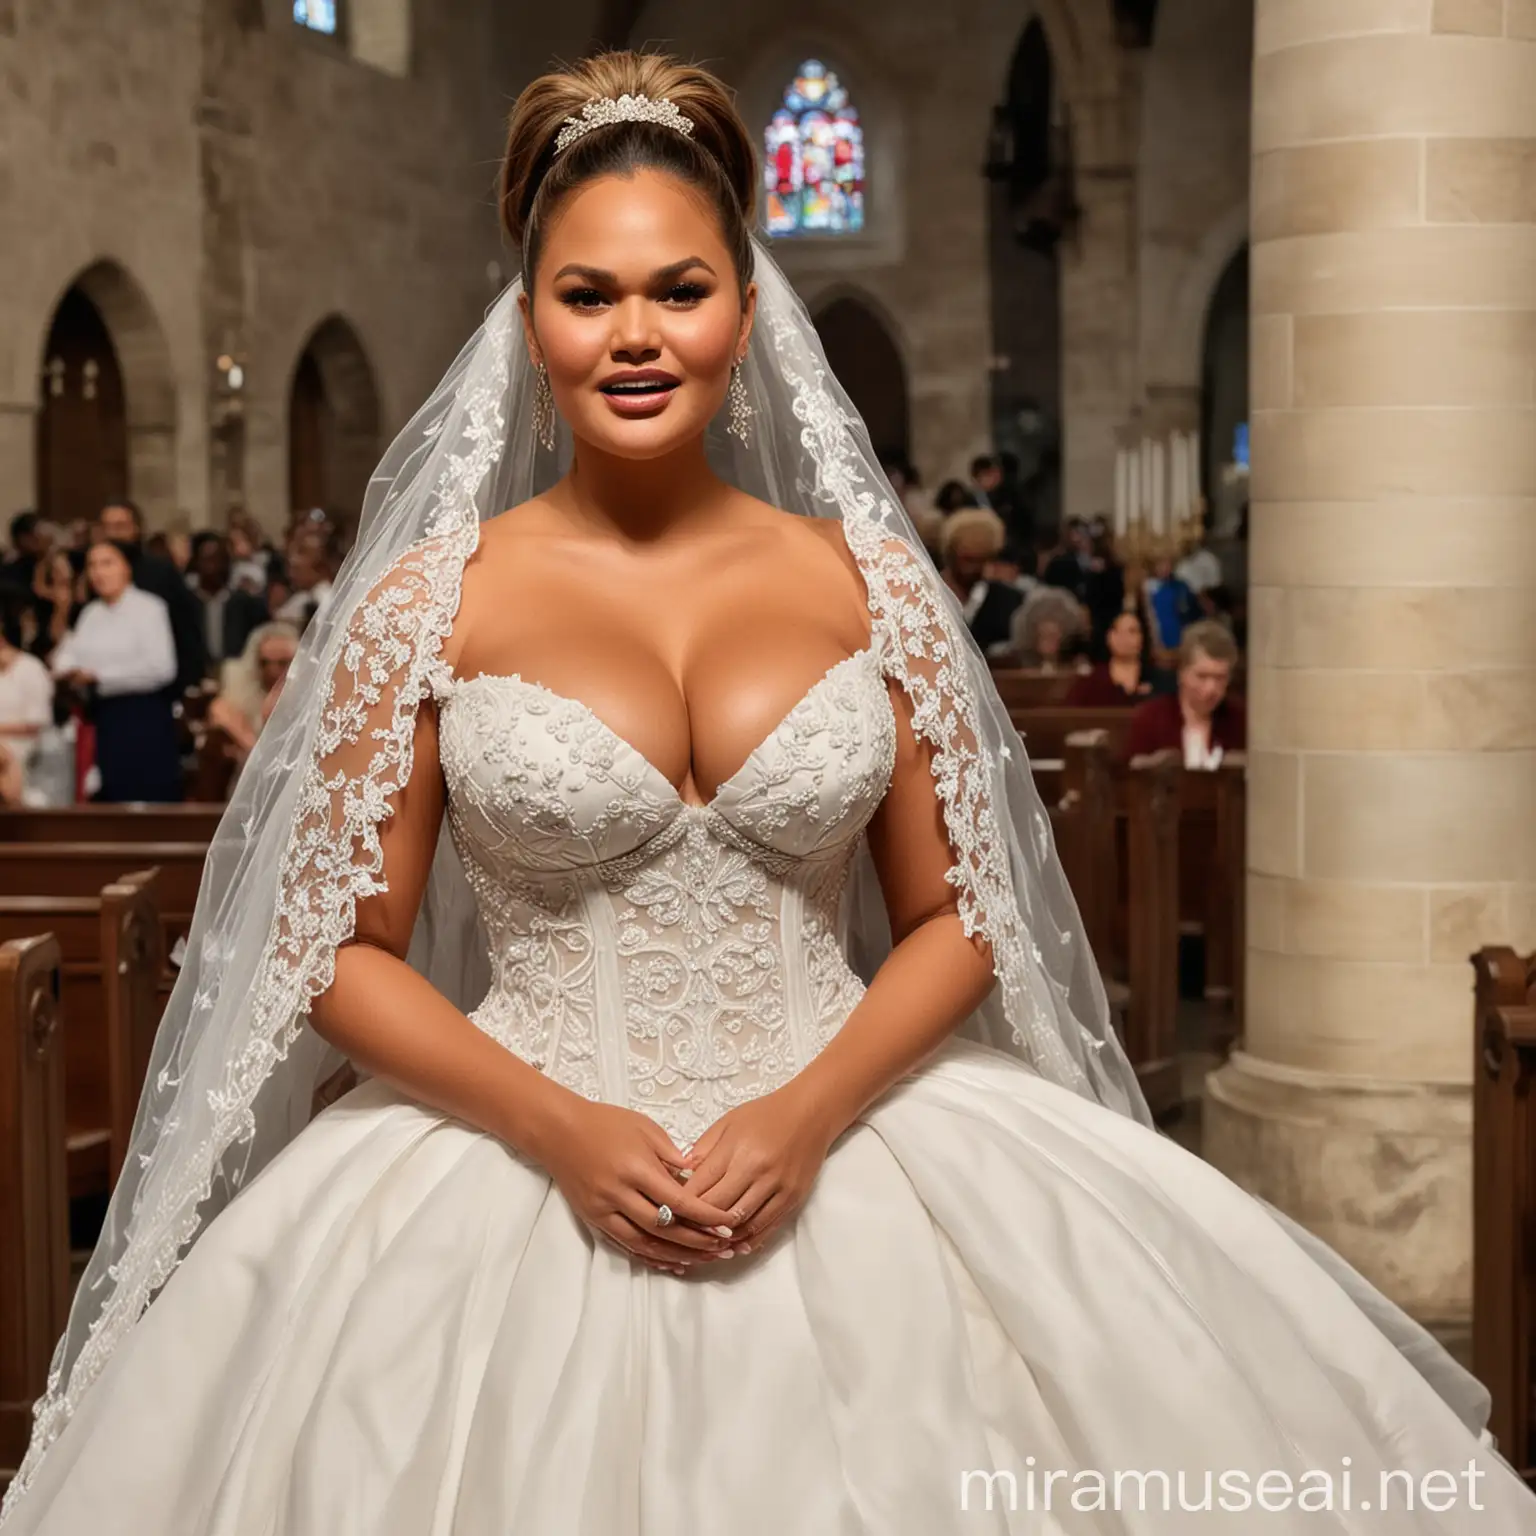 Chrissy Teigen Wedding Dress Church Ceremony Portrait with Breathtaking Cleavage